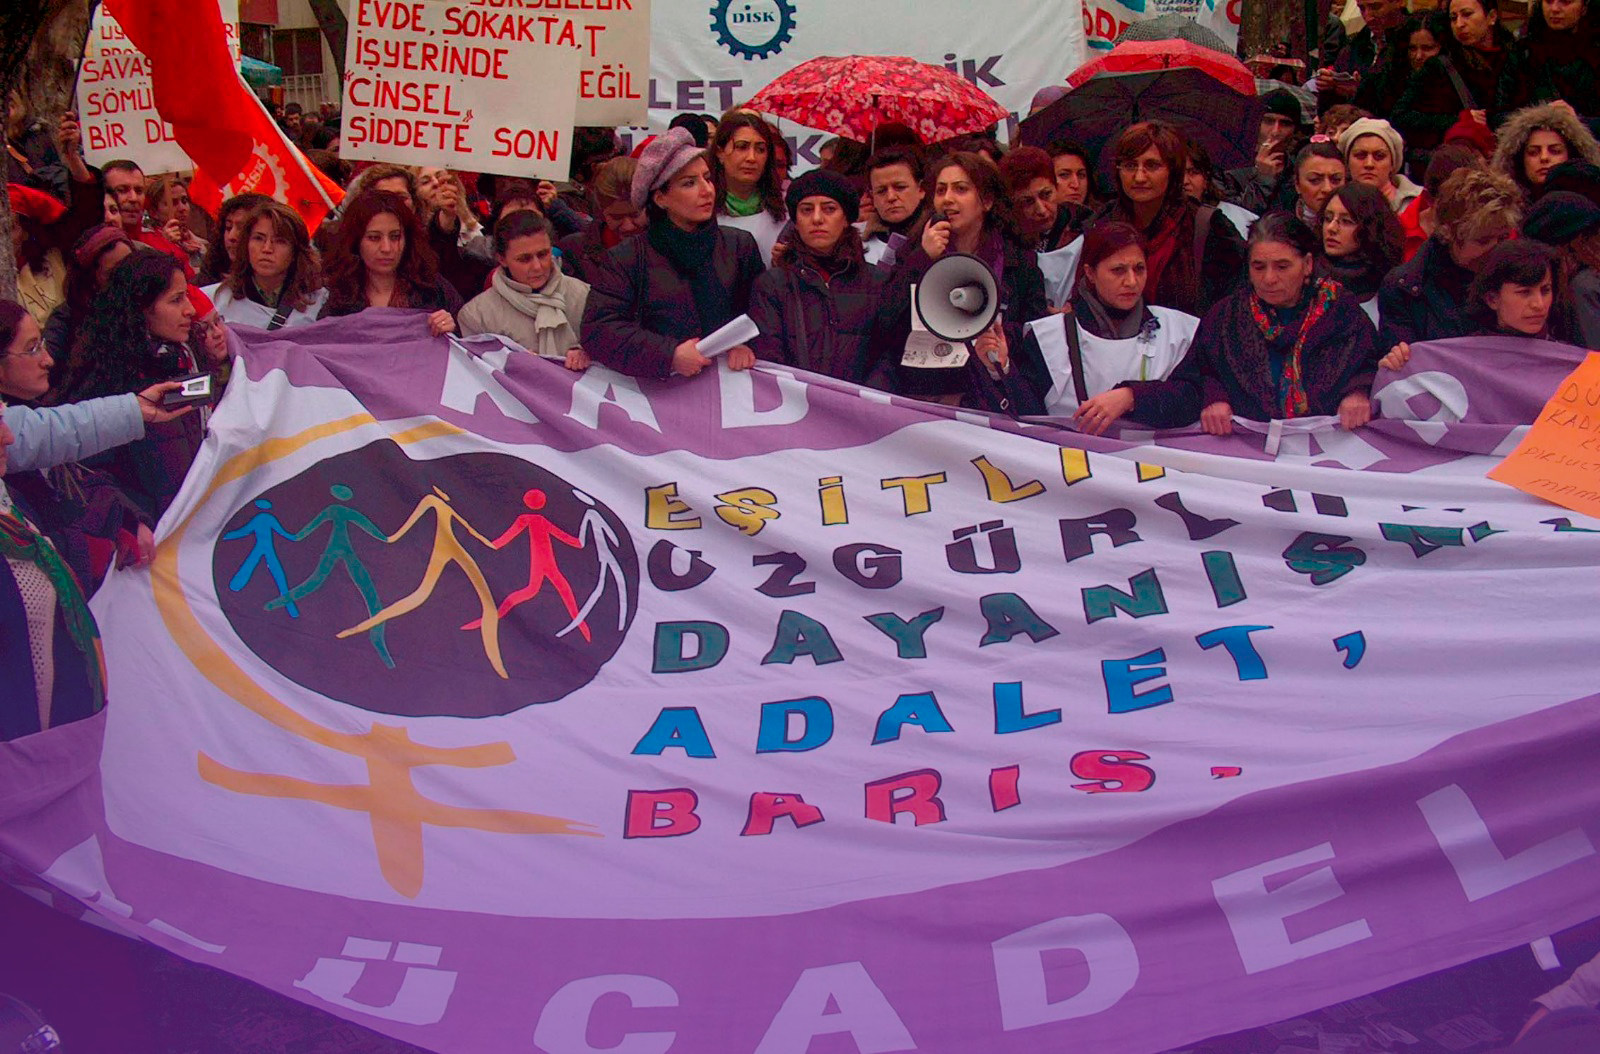 Yildiz Temürtürkan: “transforming our grassroots feminist vision into action”